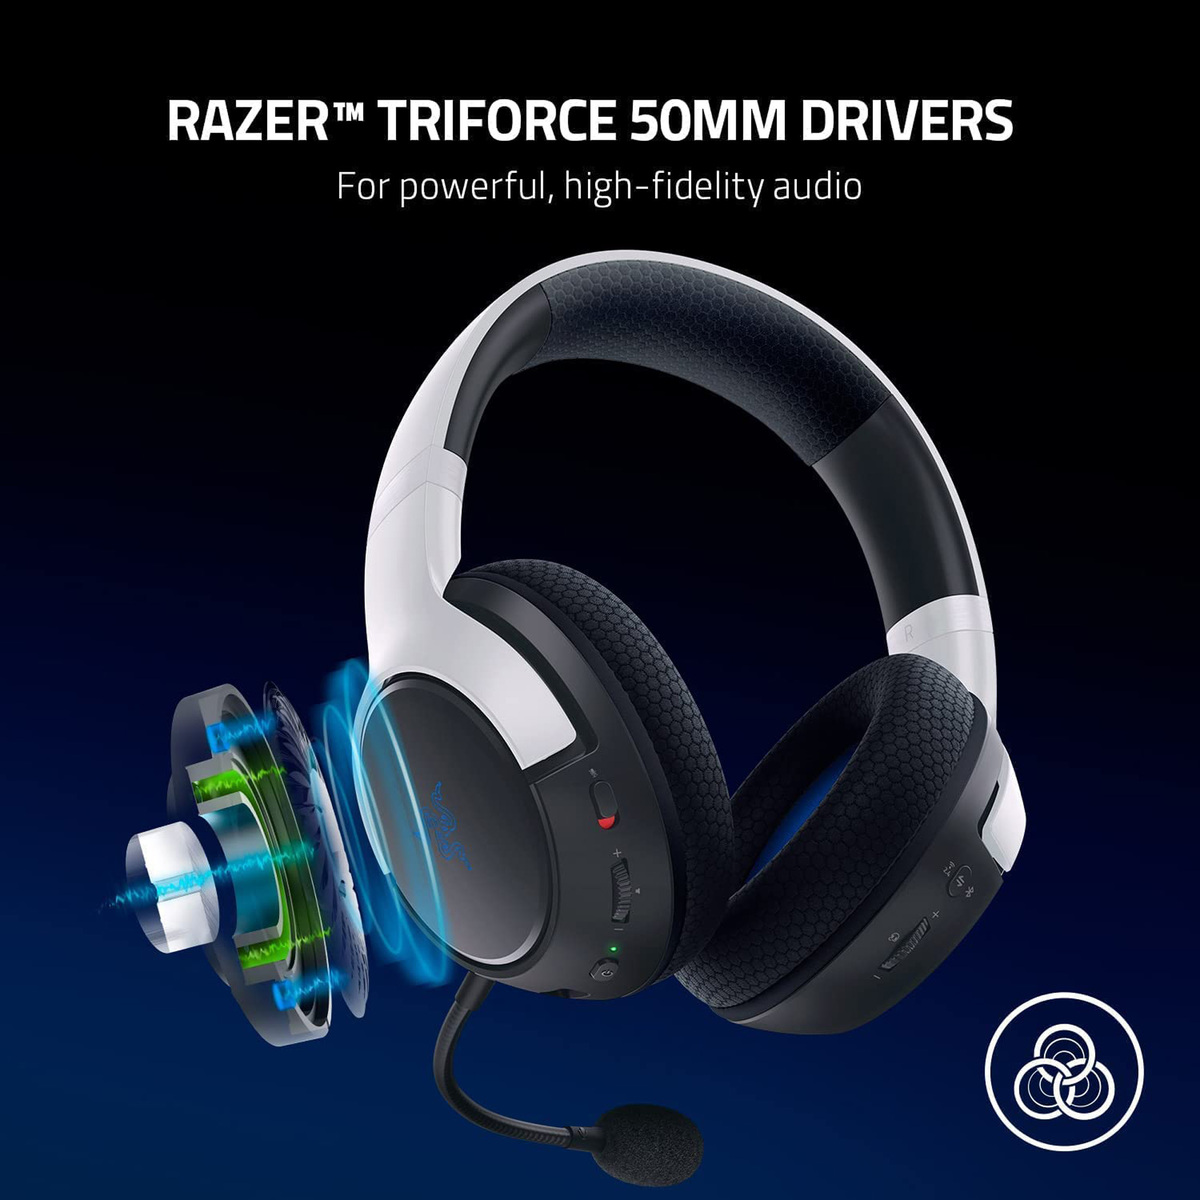 Razer Kaira X Wired Headset for PlayStation 5, White